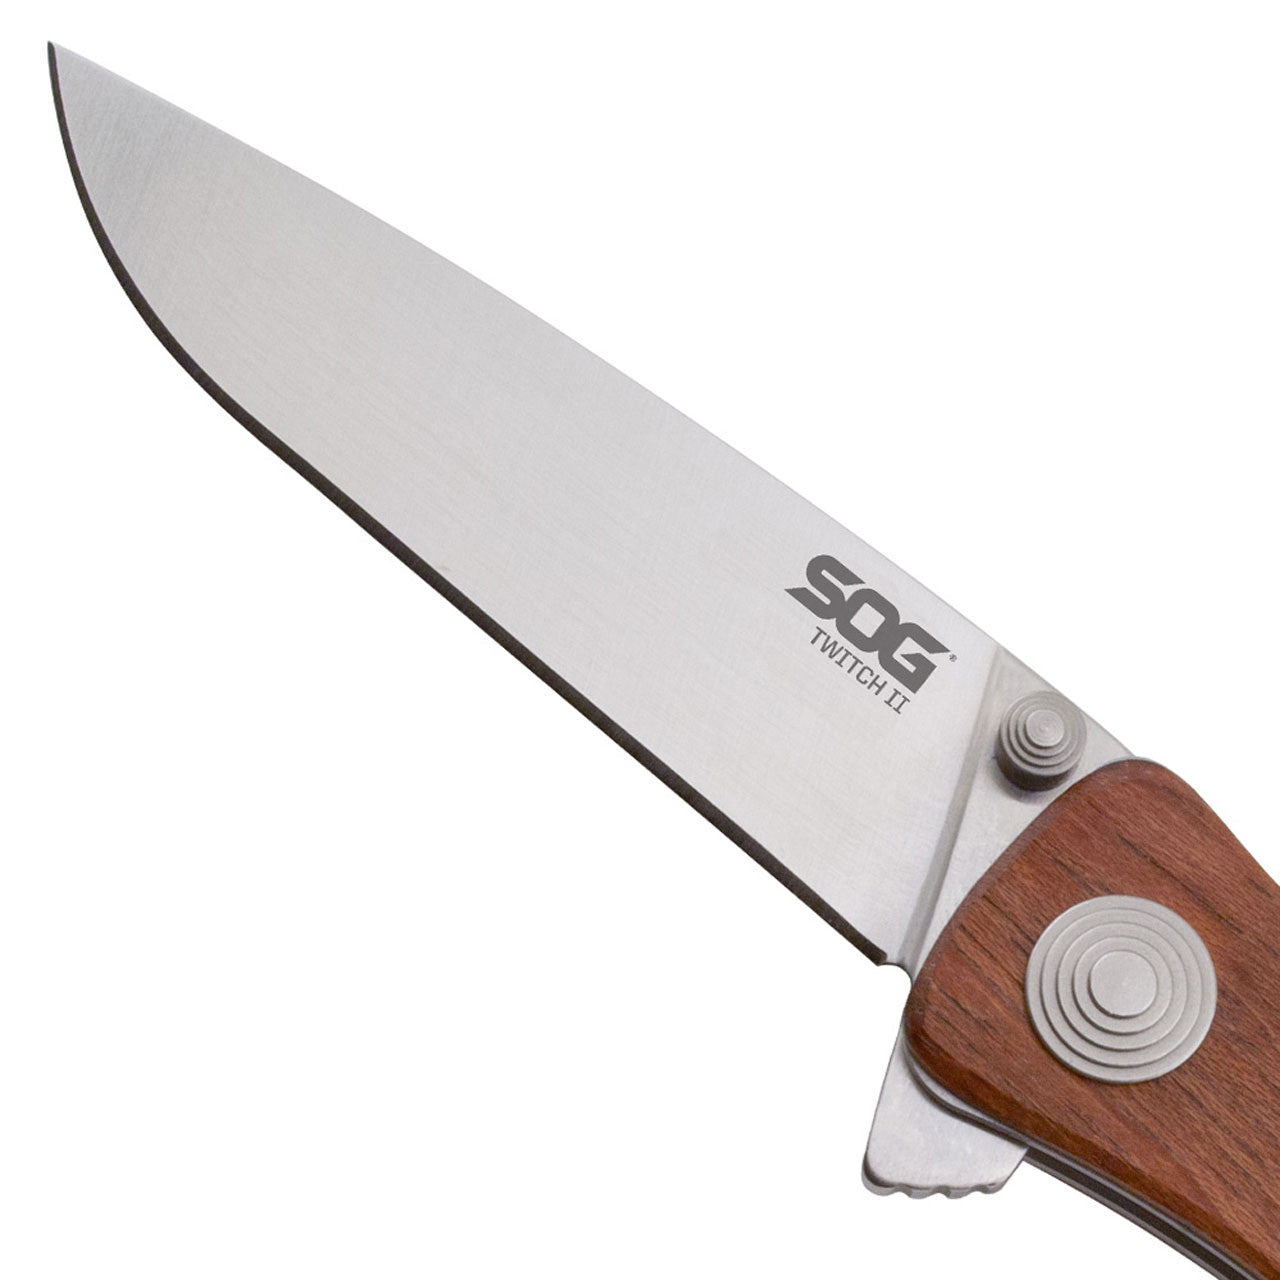 SOG Twitch II Assisted Folding Knife – Wood Handle | SOG Knives